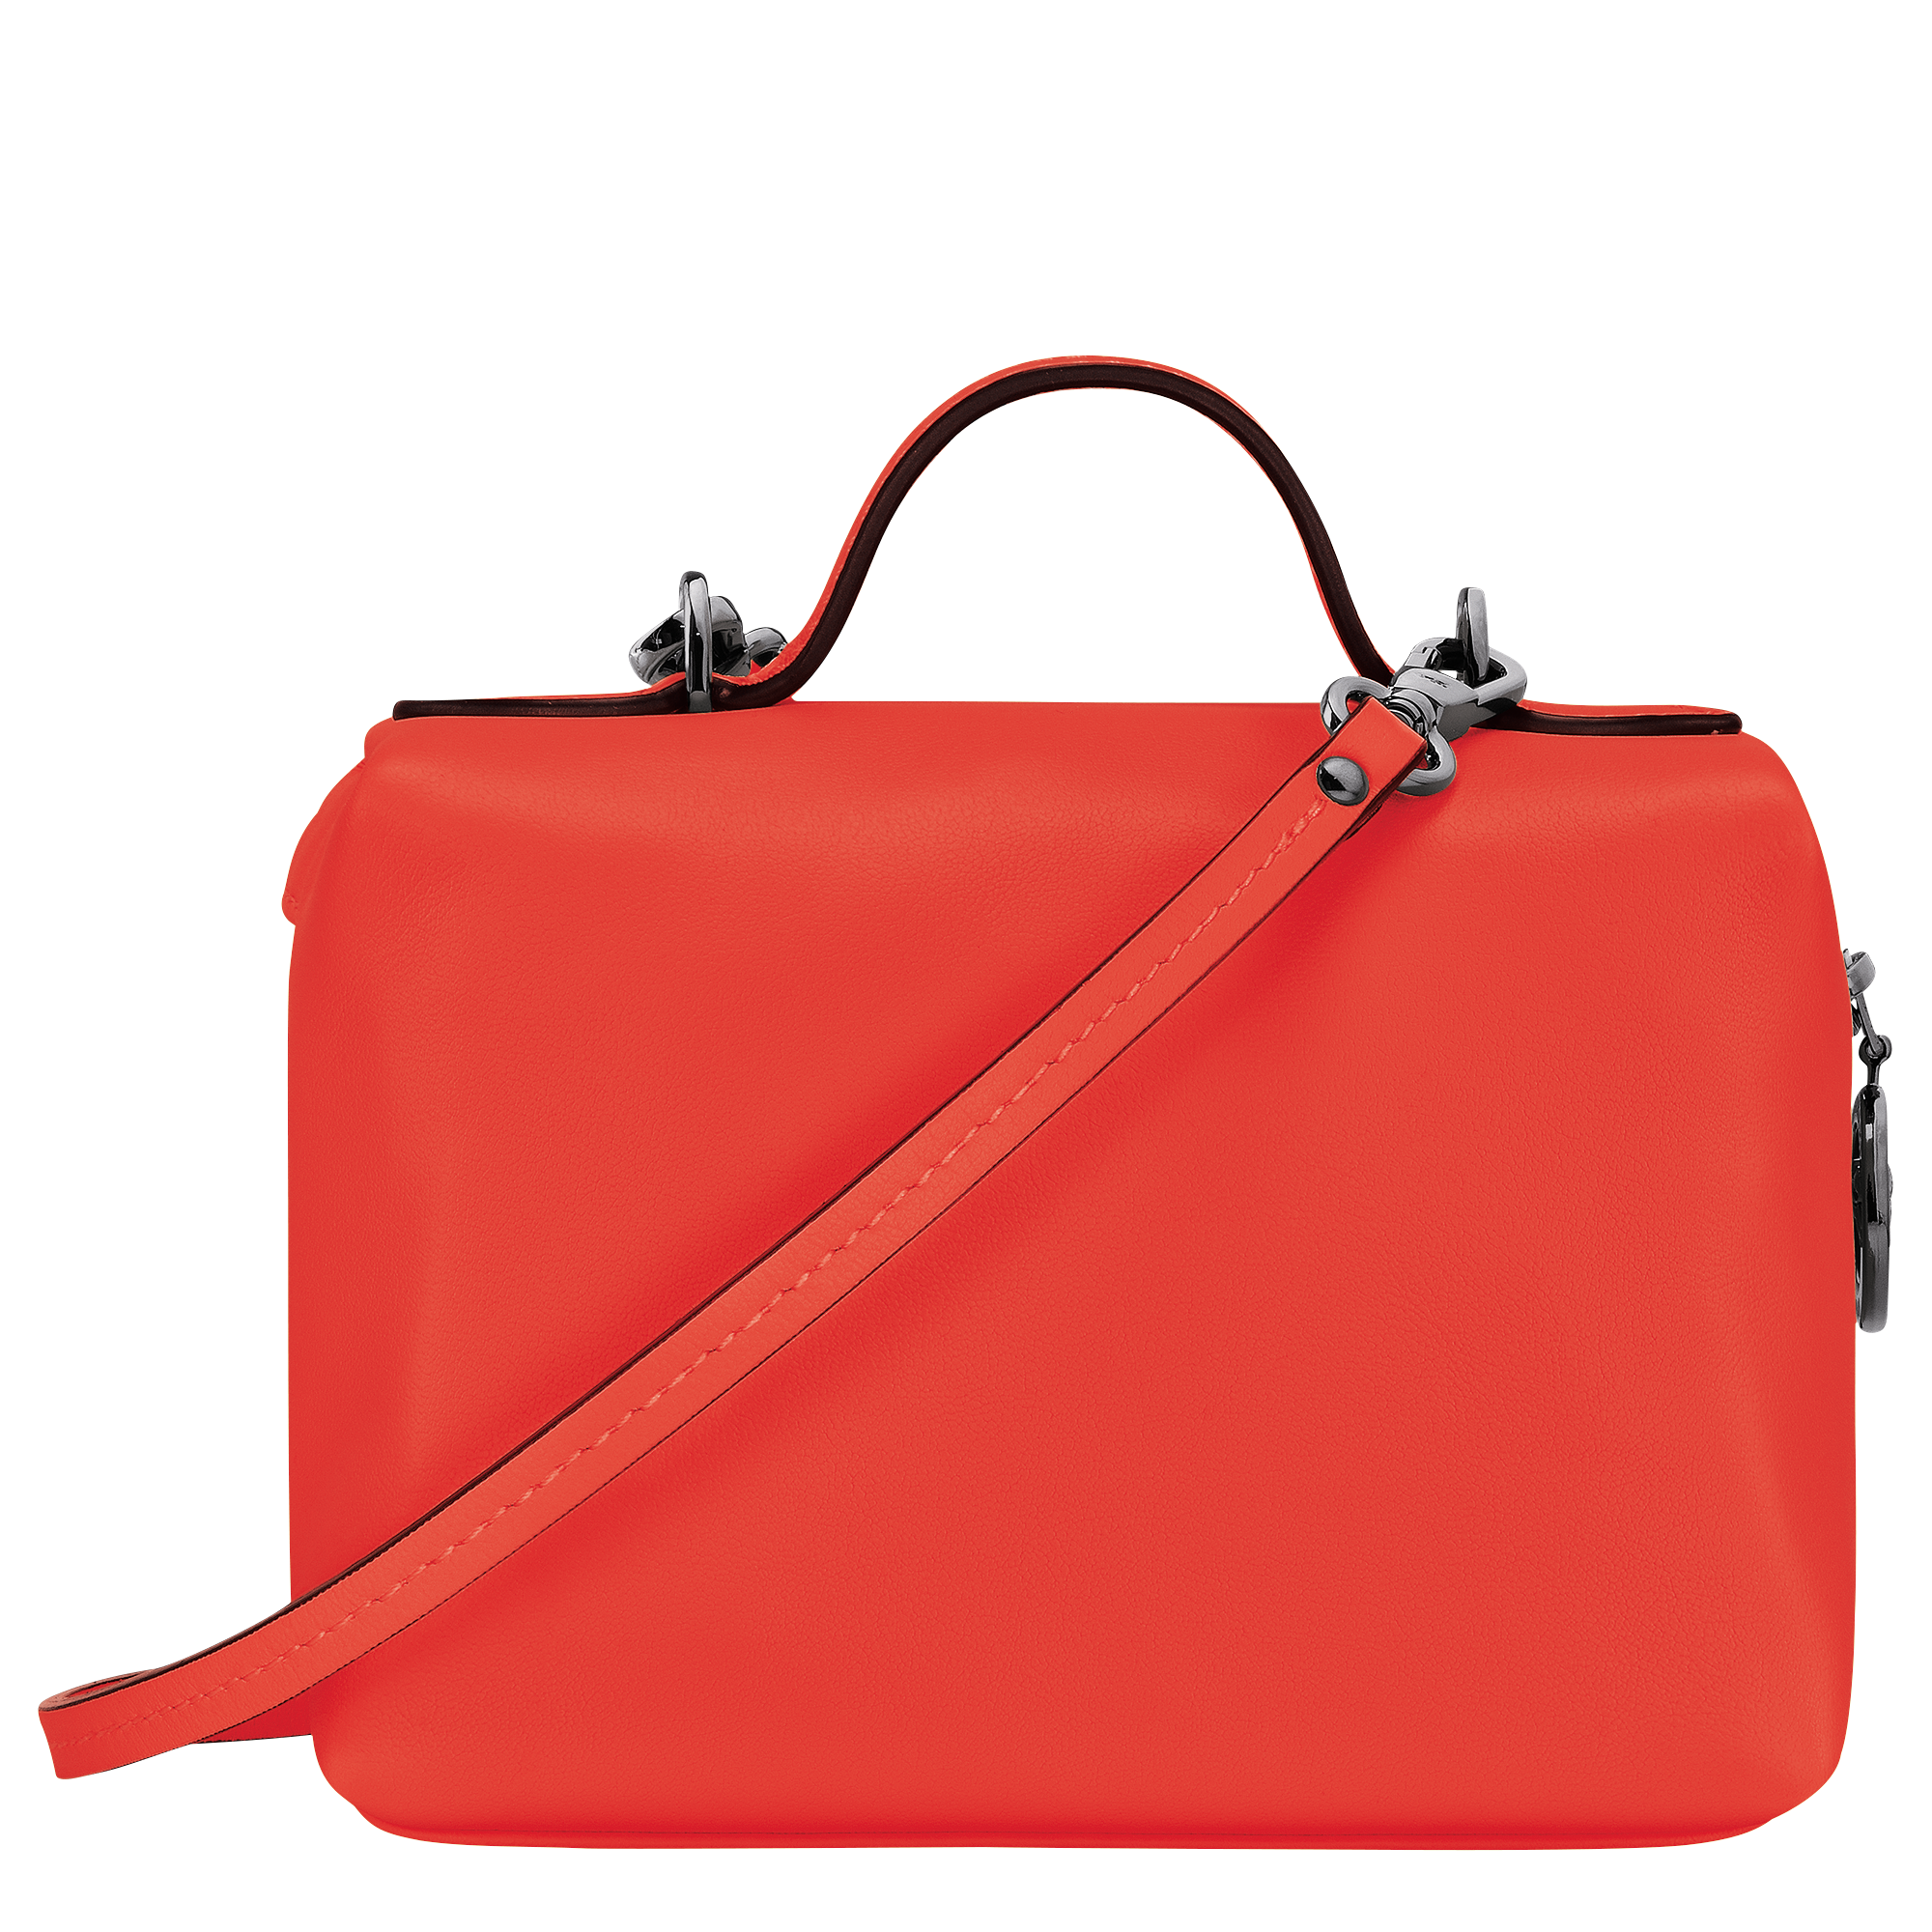 Longchamp ireland vanity orange handbag small leather designer